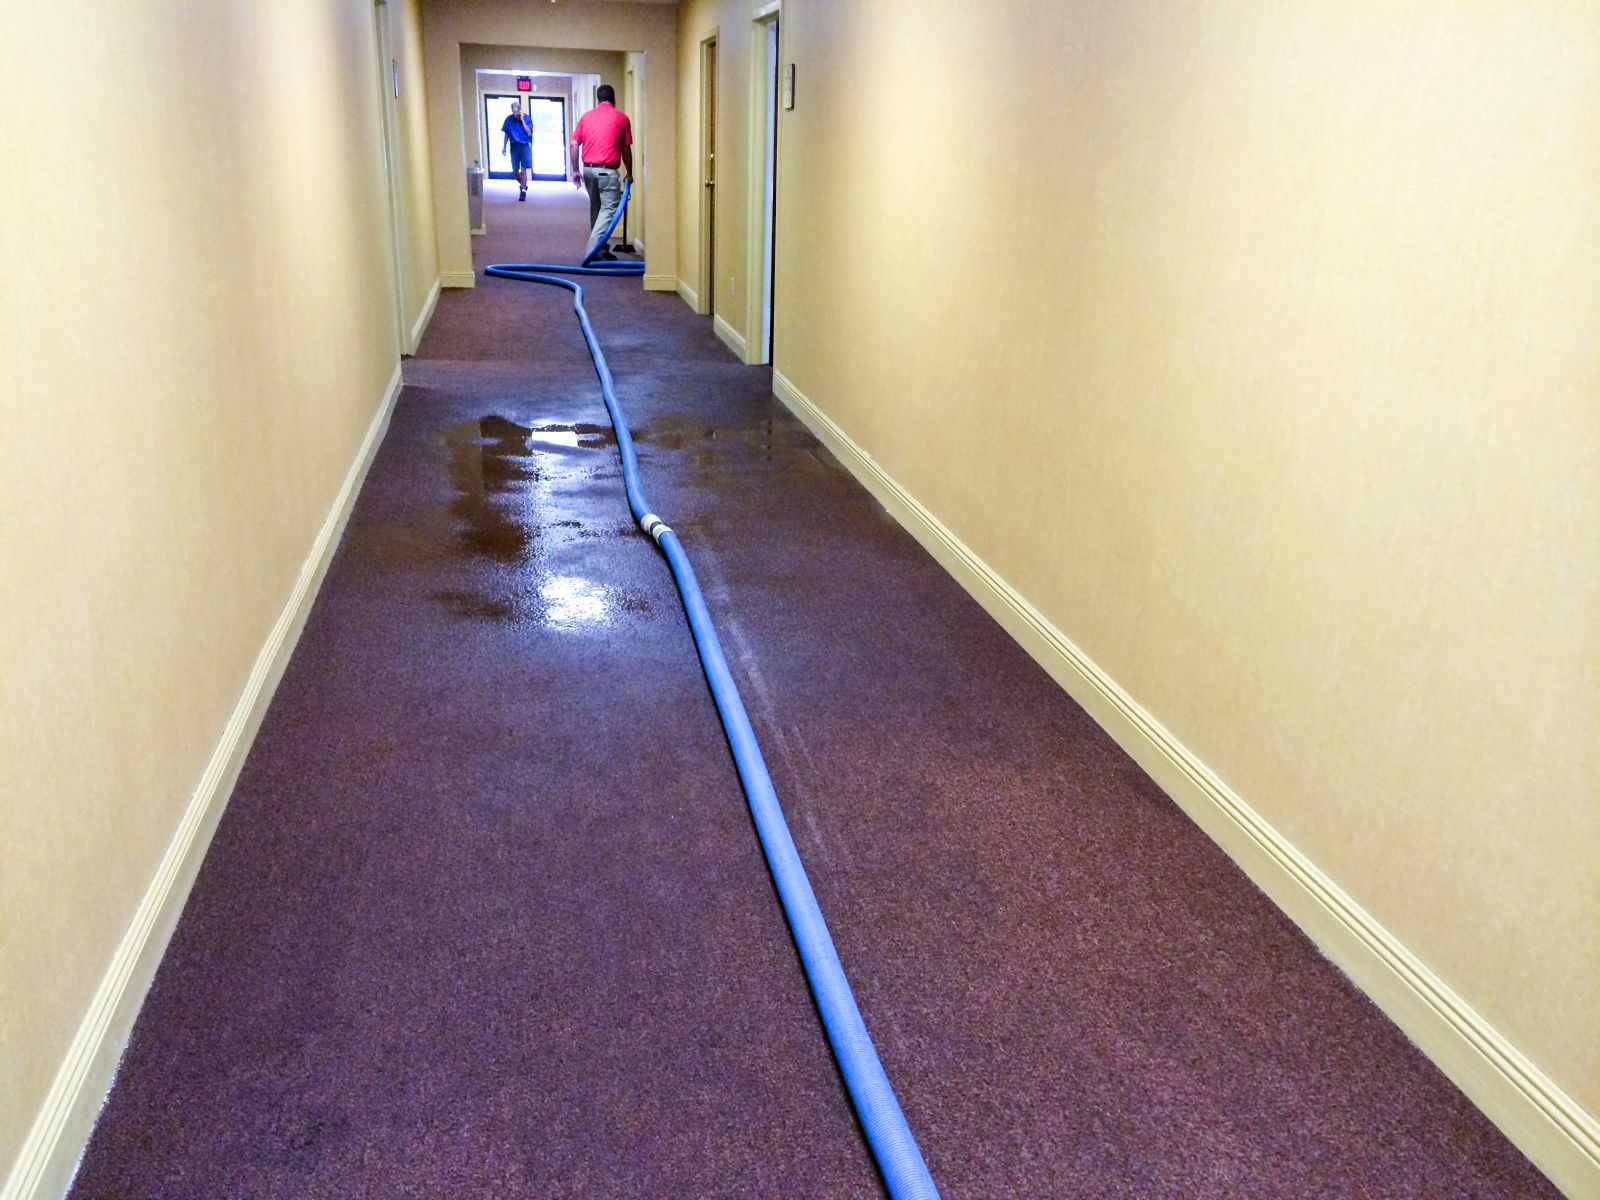 Water on carpet in hallway